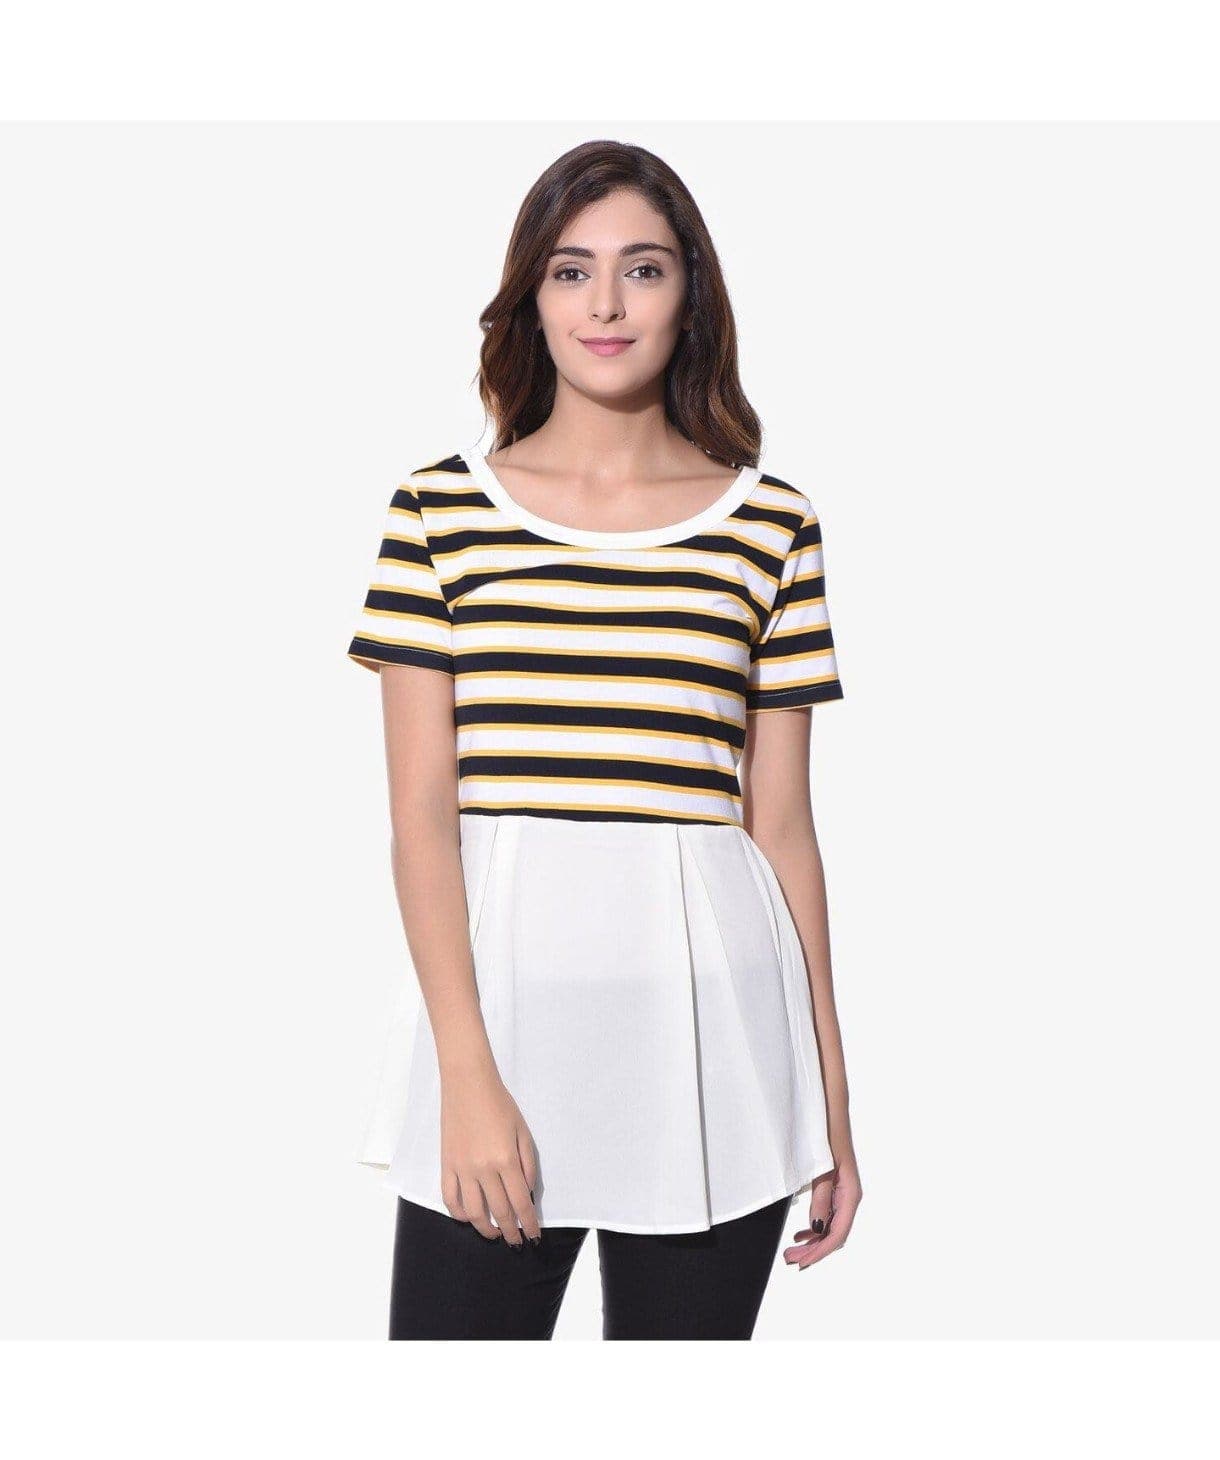 Striped Black & Yellow Top/Tunic (cotton) - Uptownie